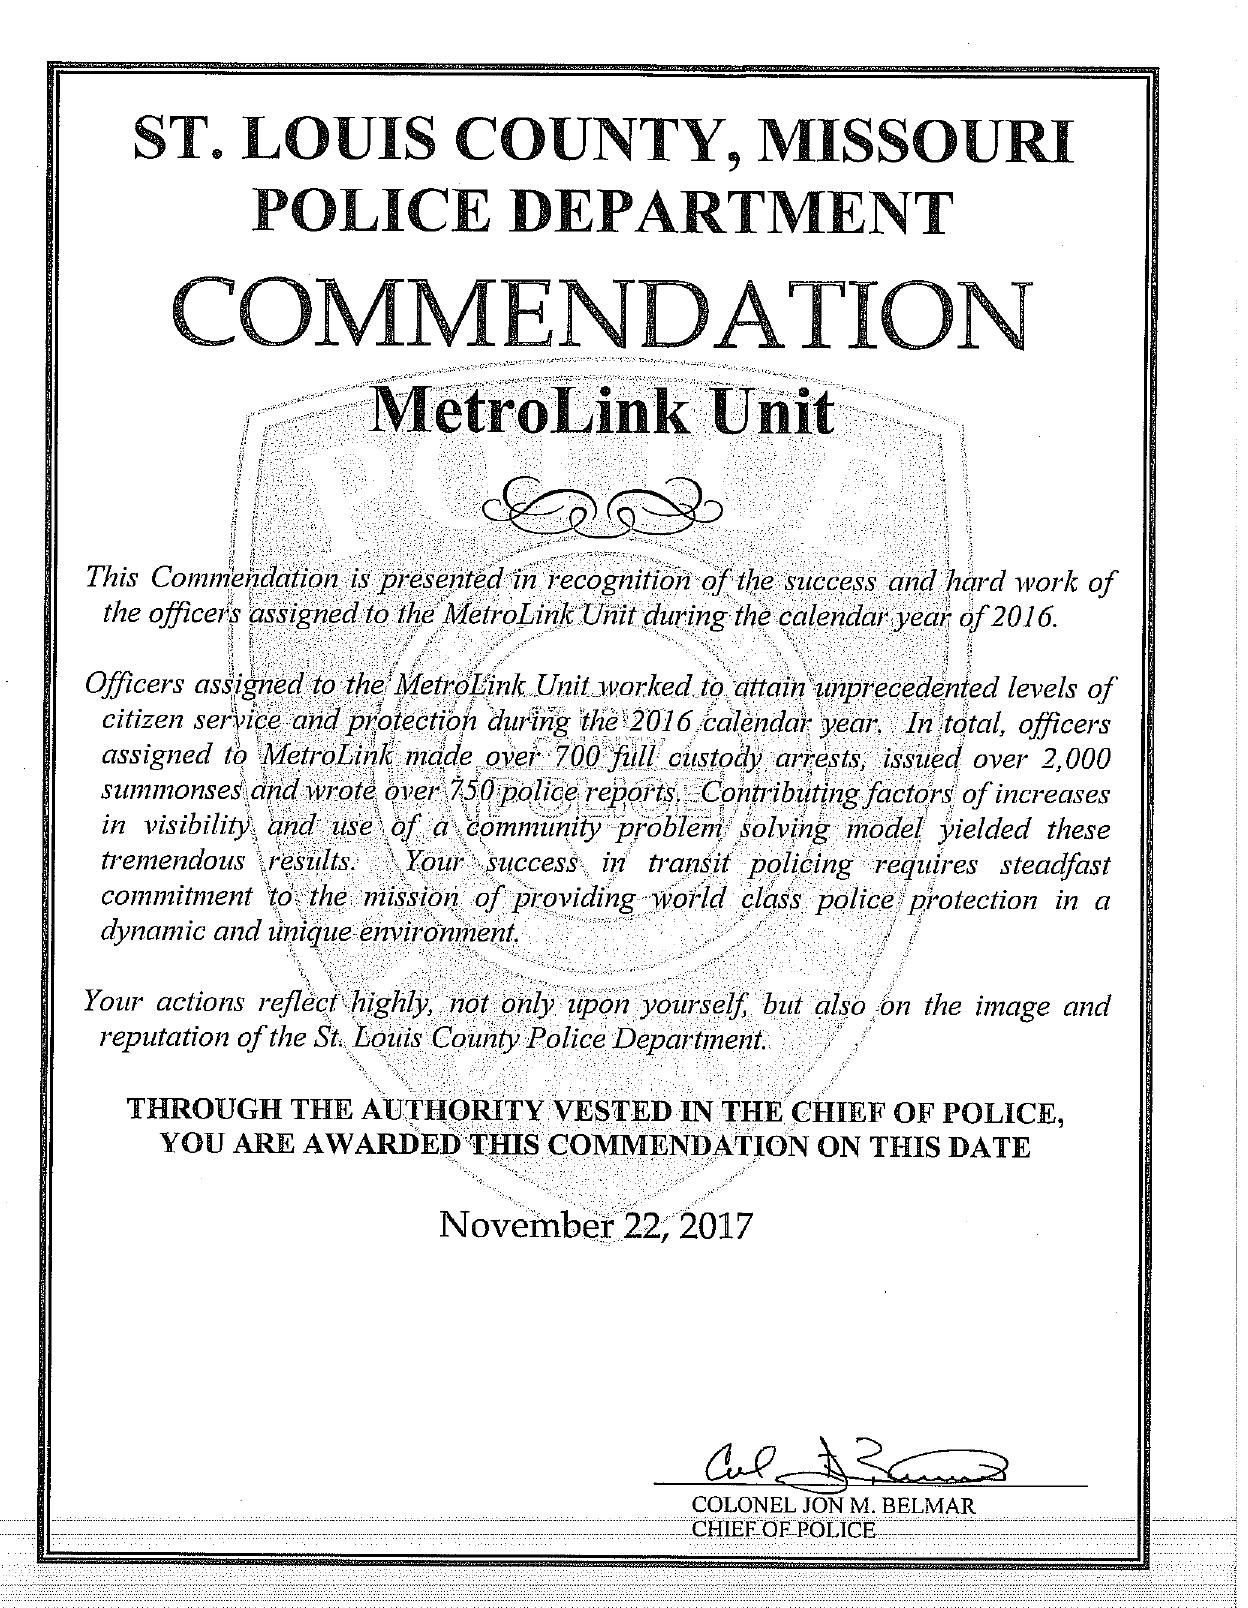 Messenger: Belmar gives commendation to MetroLink officers the same day